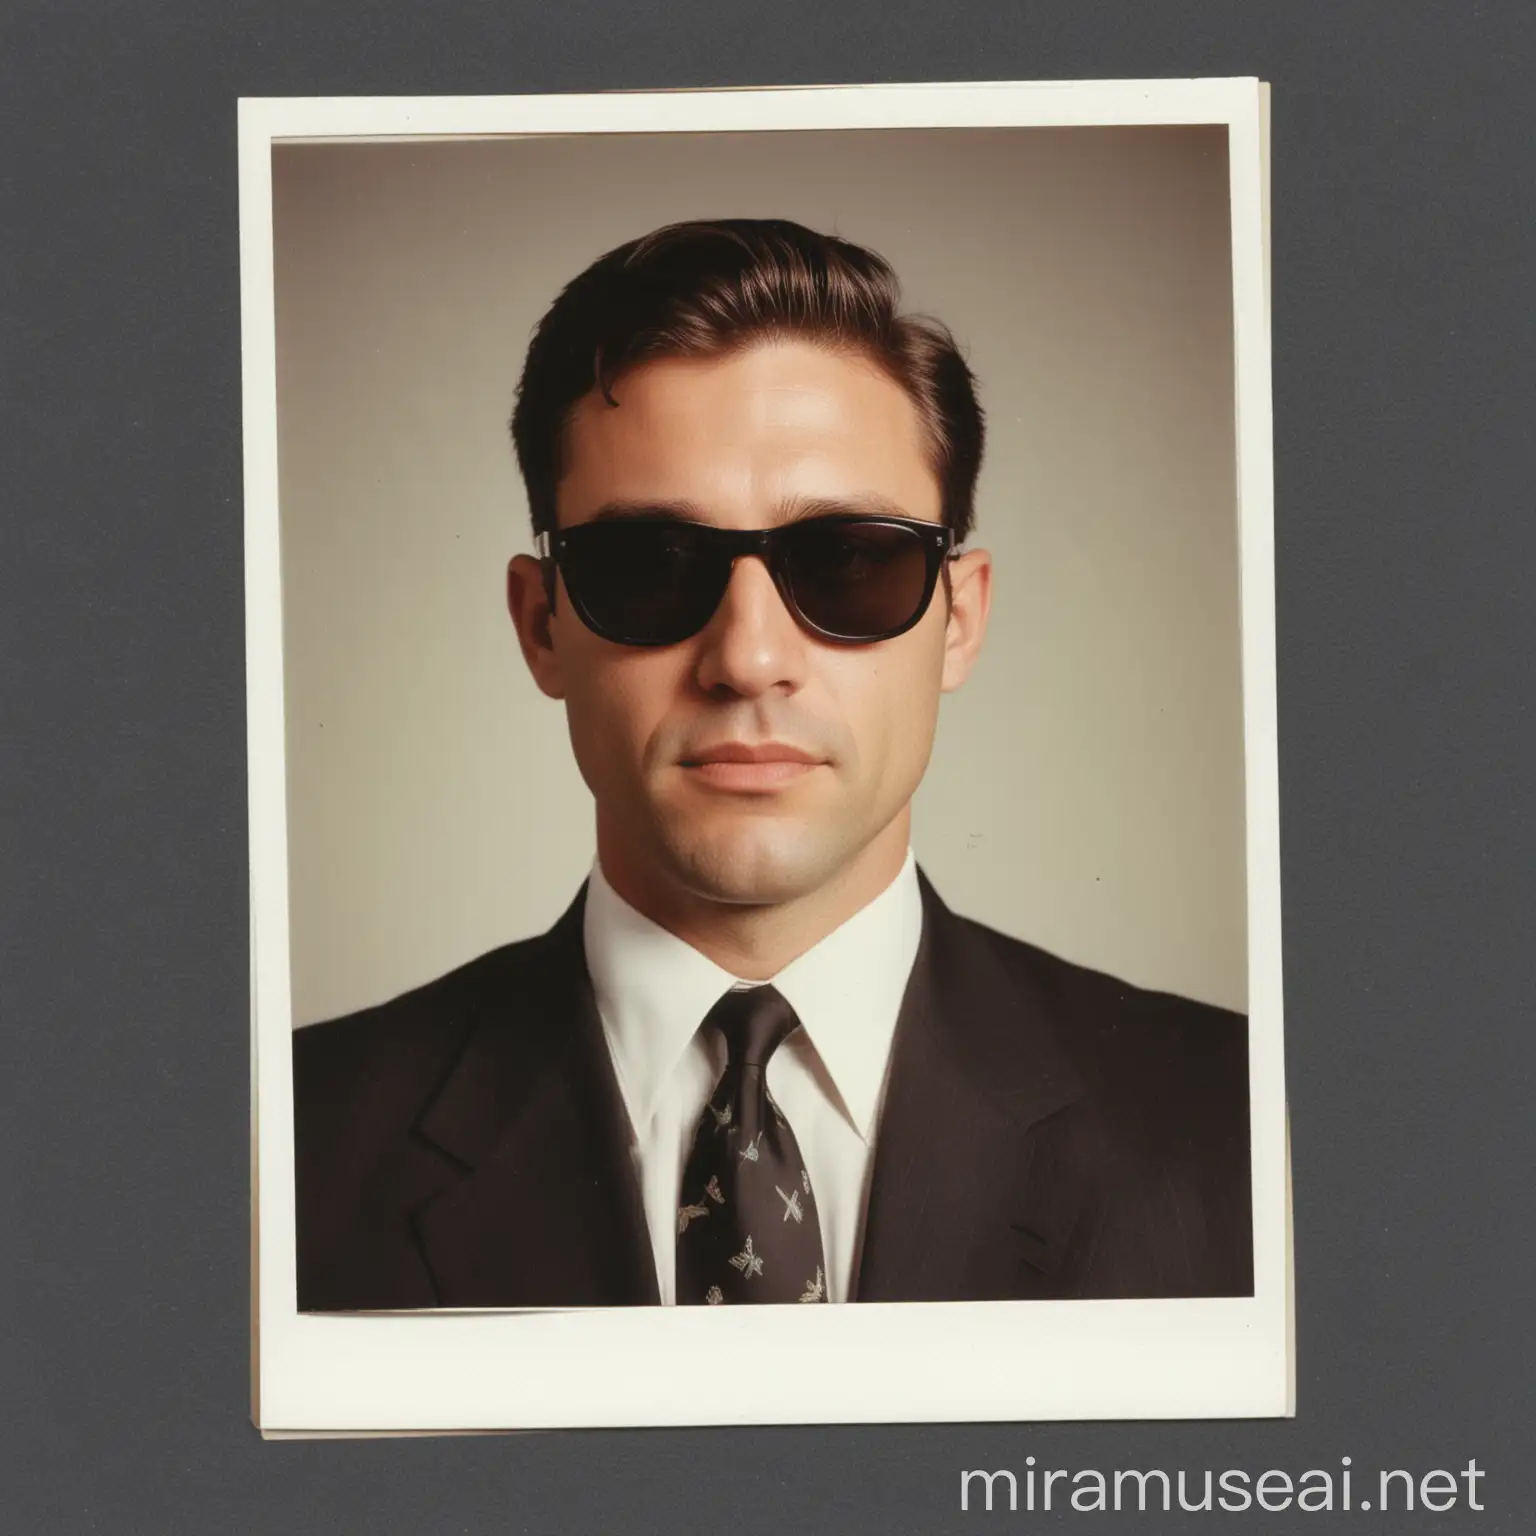 FBI Agent Wearing Sunglasses in 1993 Polaroid Portrait